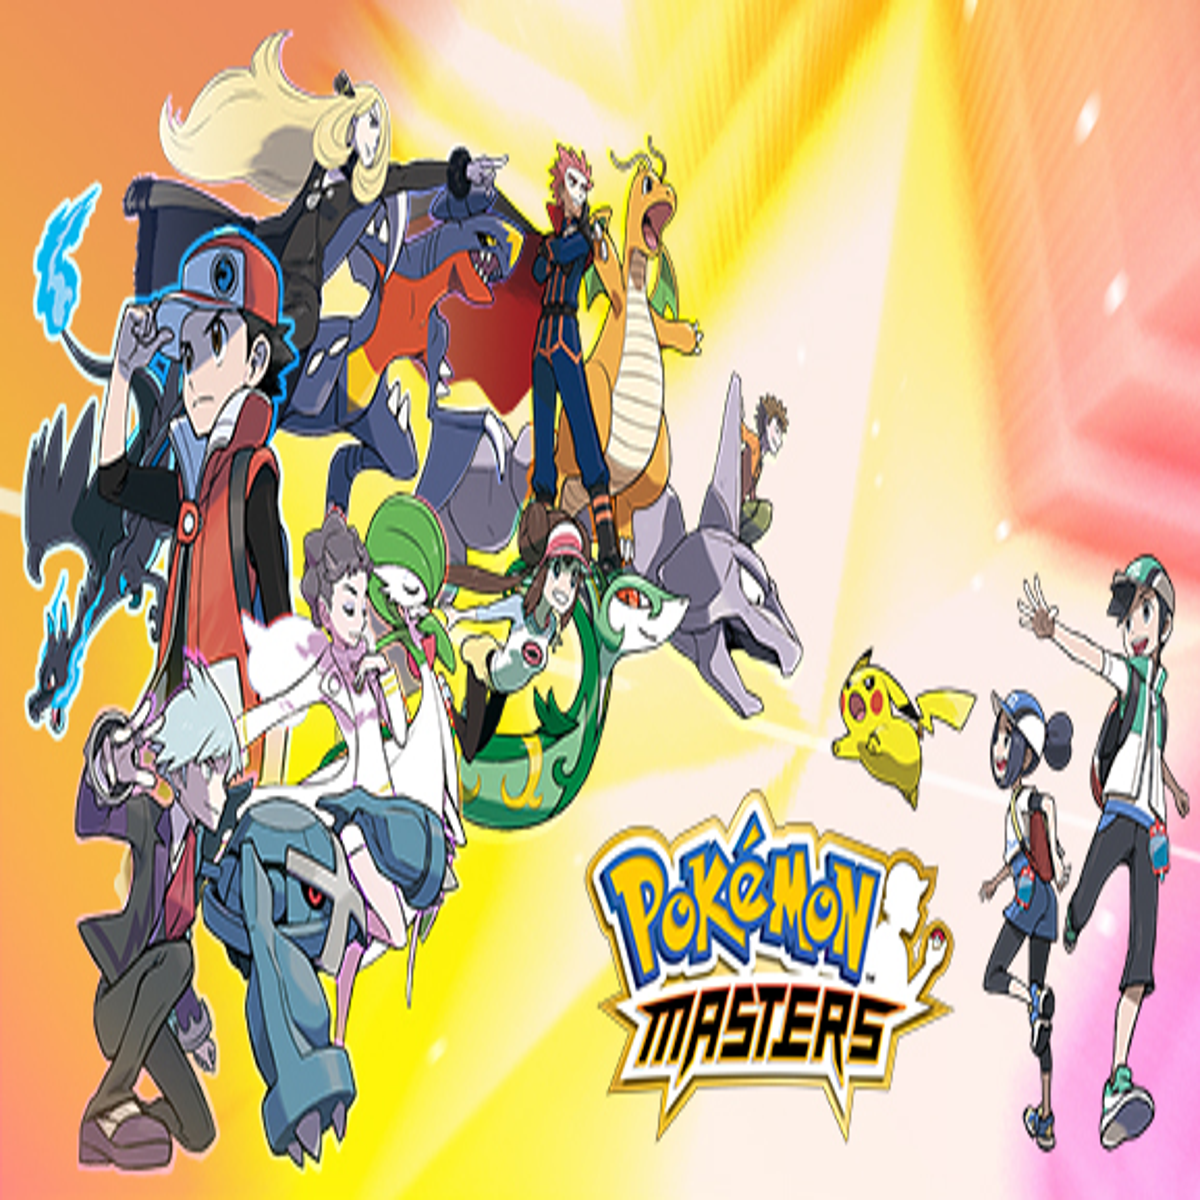 Pokémon Masters - New Pokémon mobile game by DeNA revealed - MMO